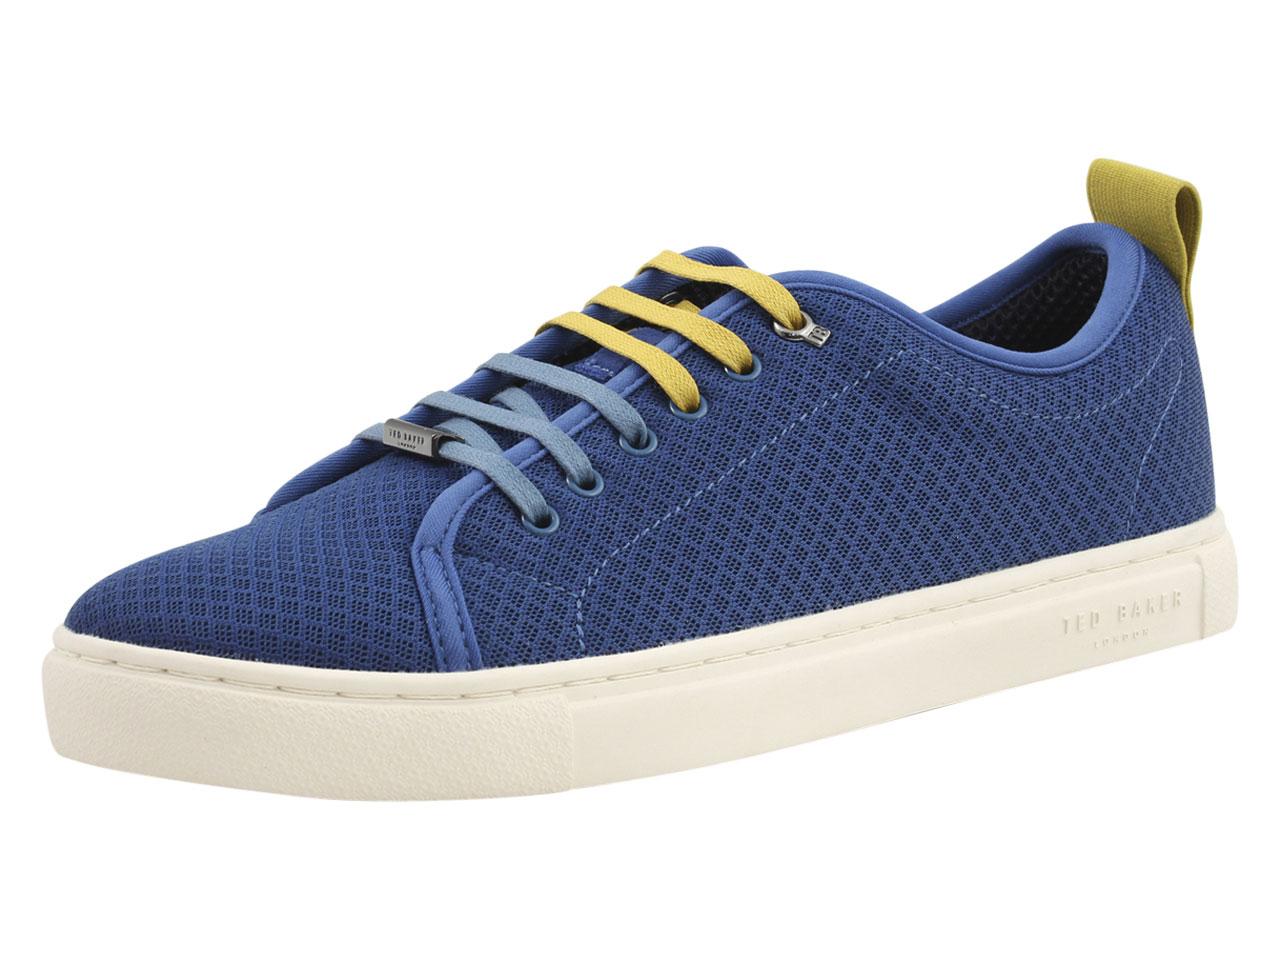 Ted Baker Men's Lannse Fashion Sneakers Shoes - Blue - 8 D(M) US